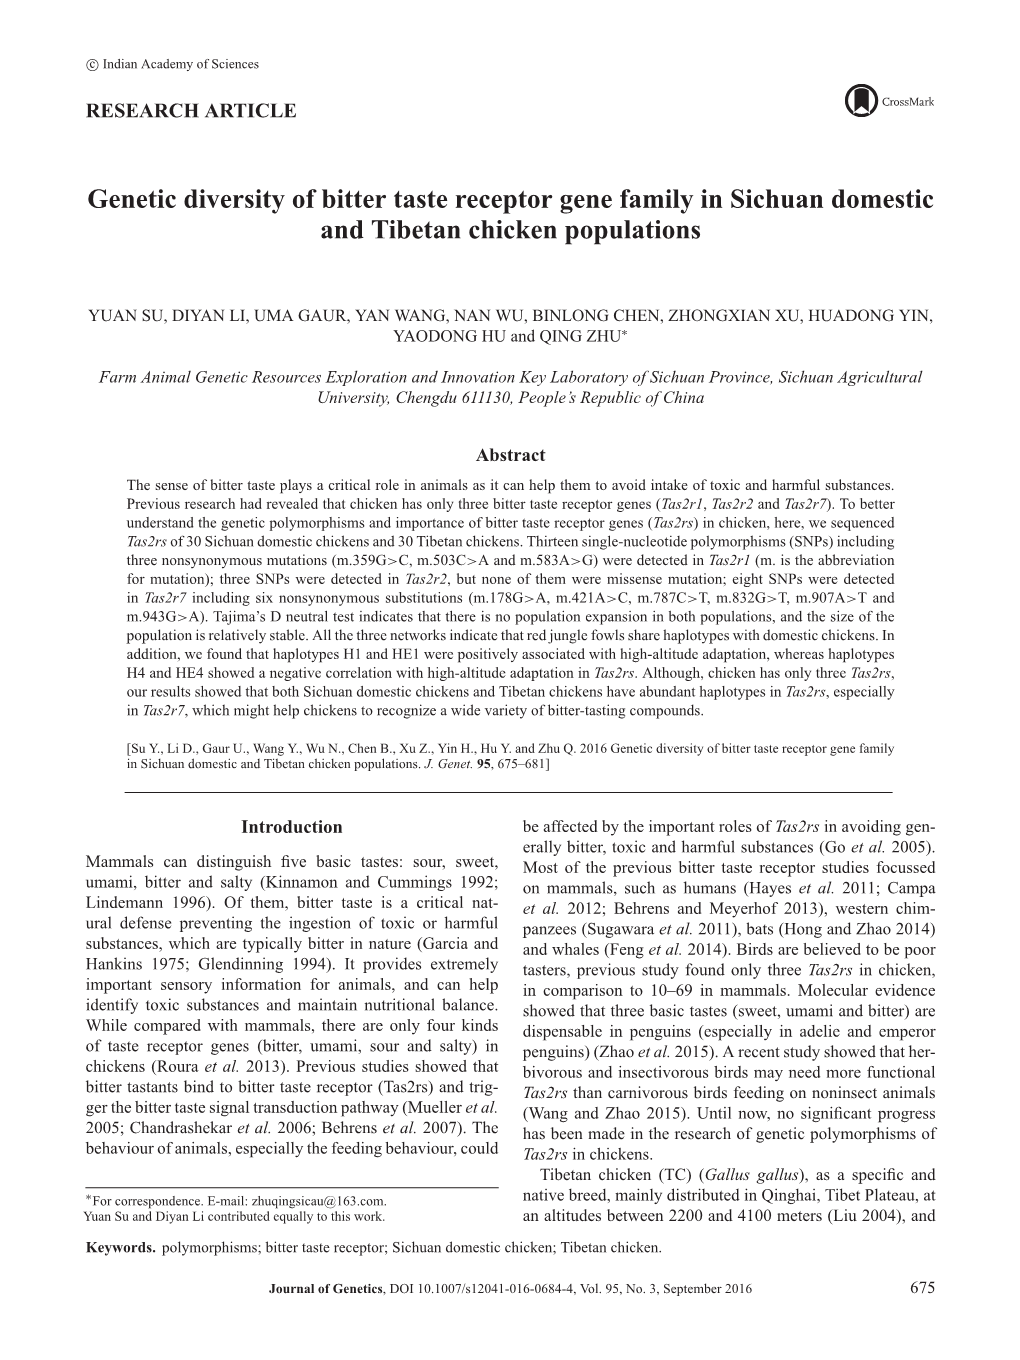 Genetic Diversity of Bitter Taste Receptor Gene Family in Sichuan Domestic and Tibetan Chicken Populations